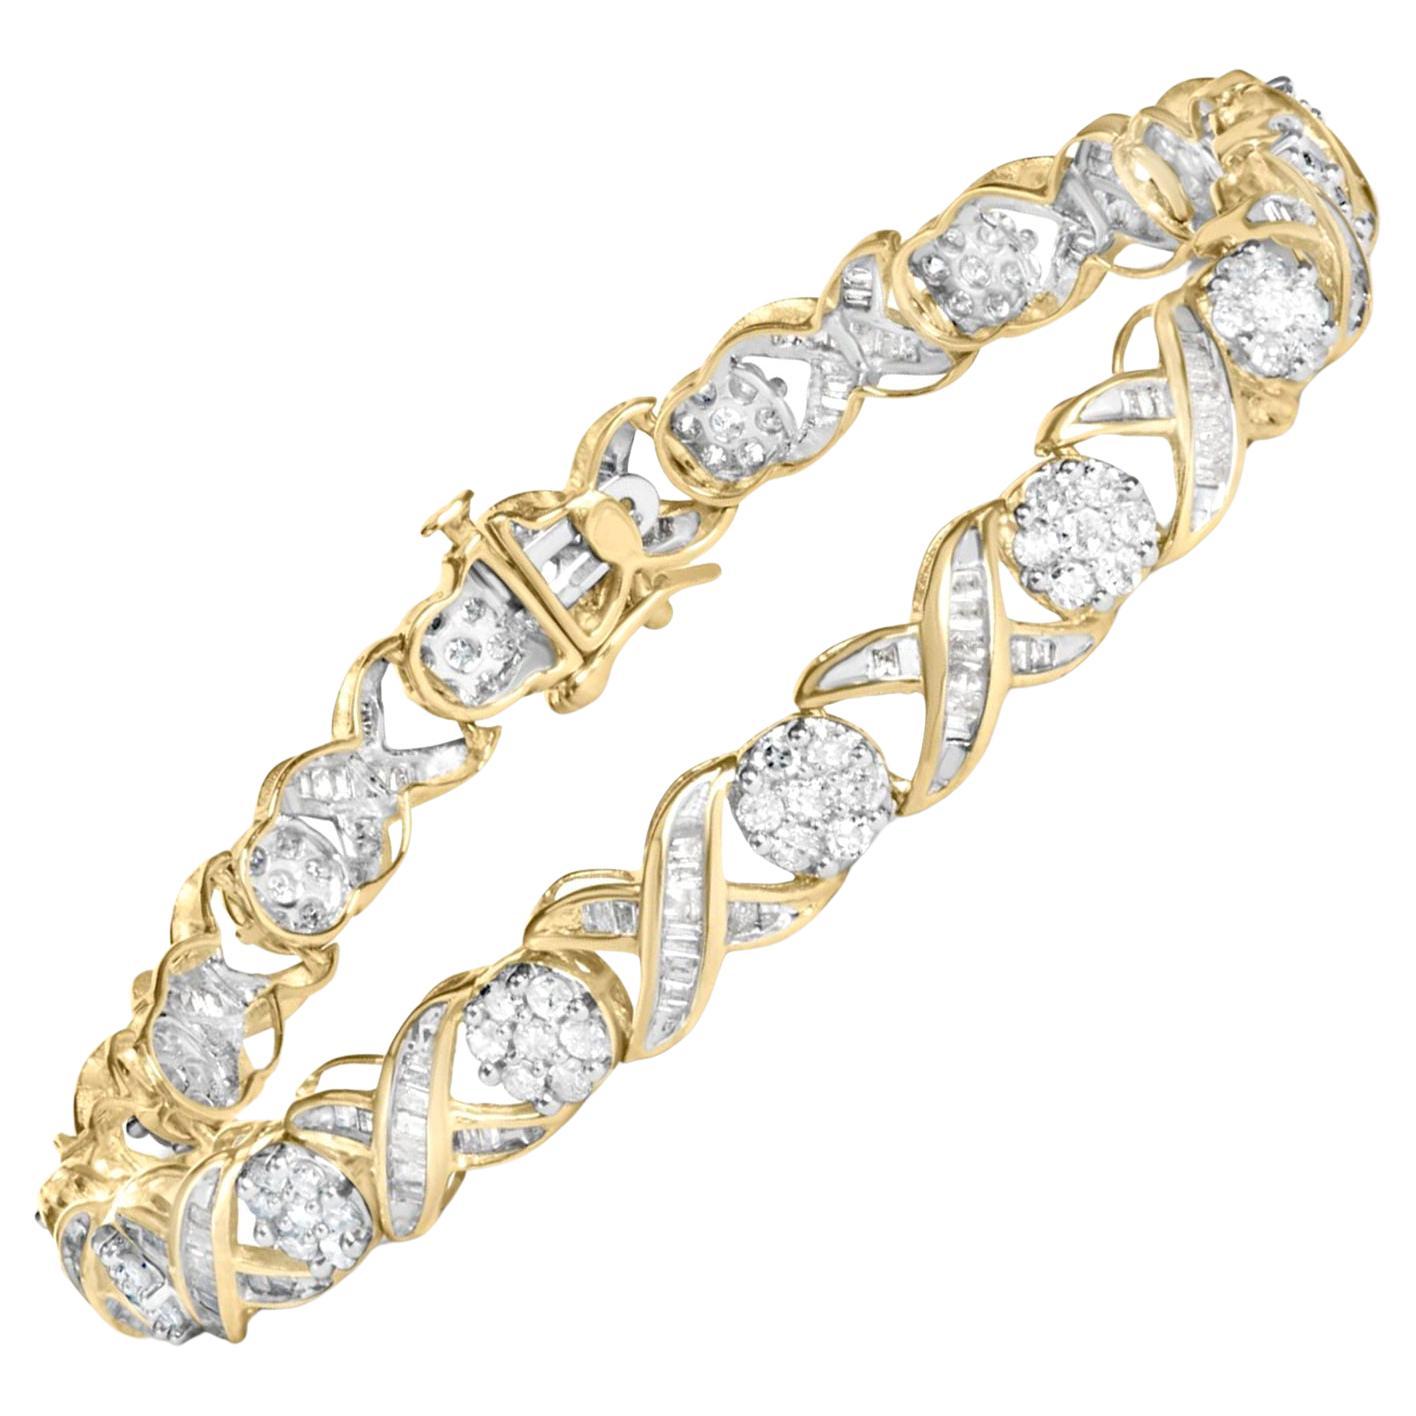 XOXO Bracelet Link Diamond Round and Baguette Cut 3 Carats 10K Yellow Gold